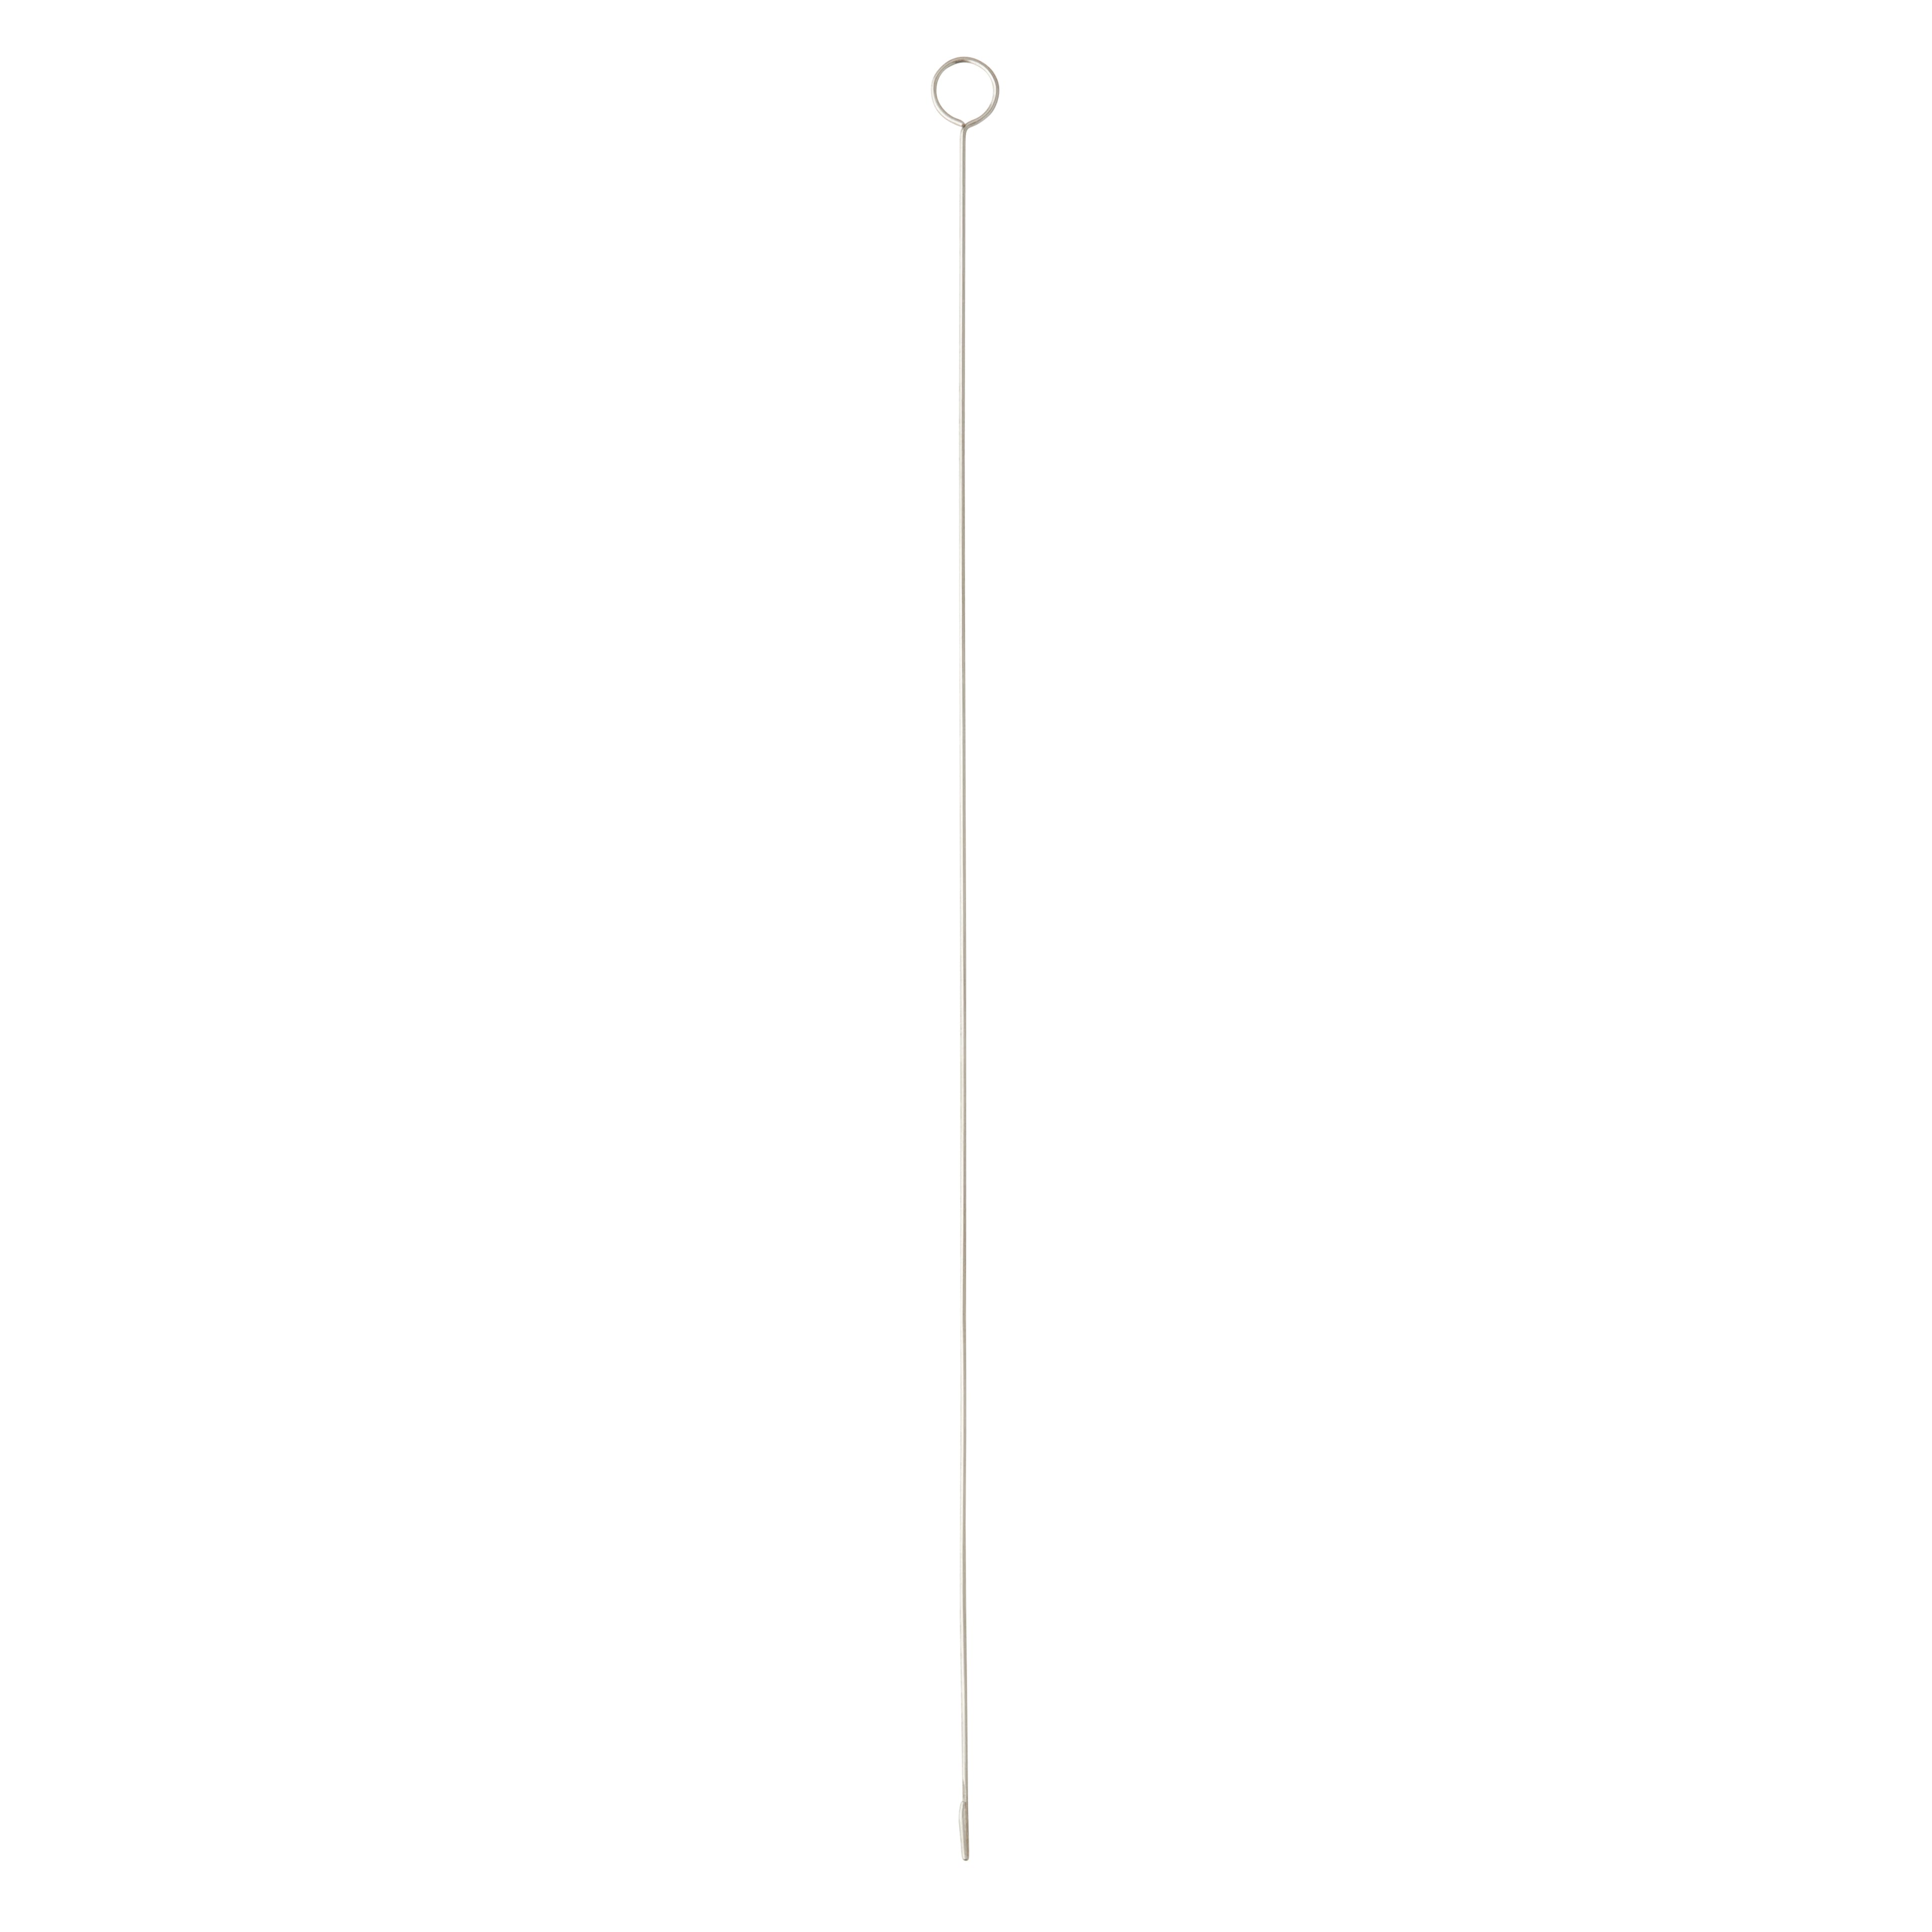 Needle for Elastic Stretch Cord 10.75 In 1 pcs [BPND-EL10] - $2.99